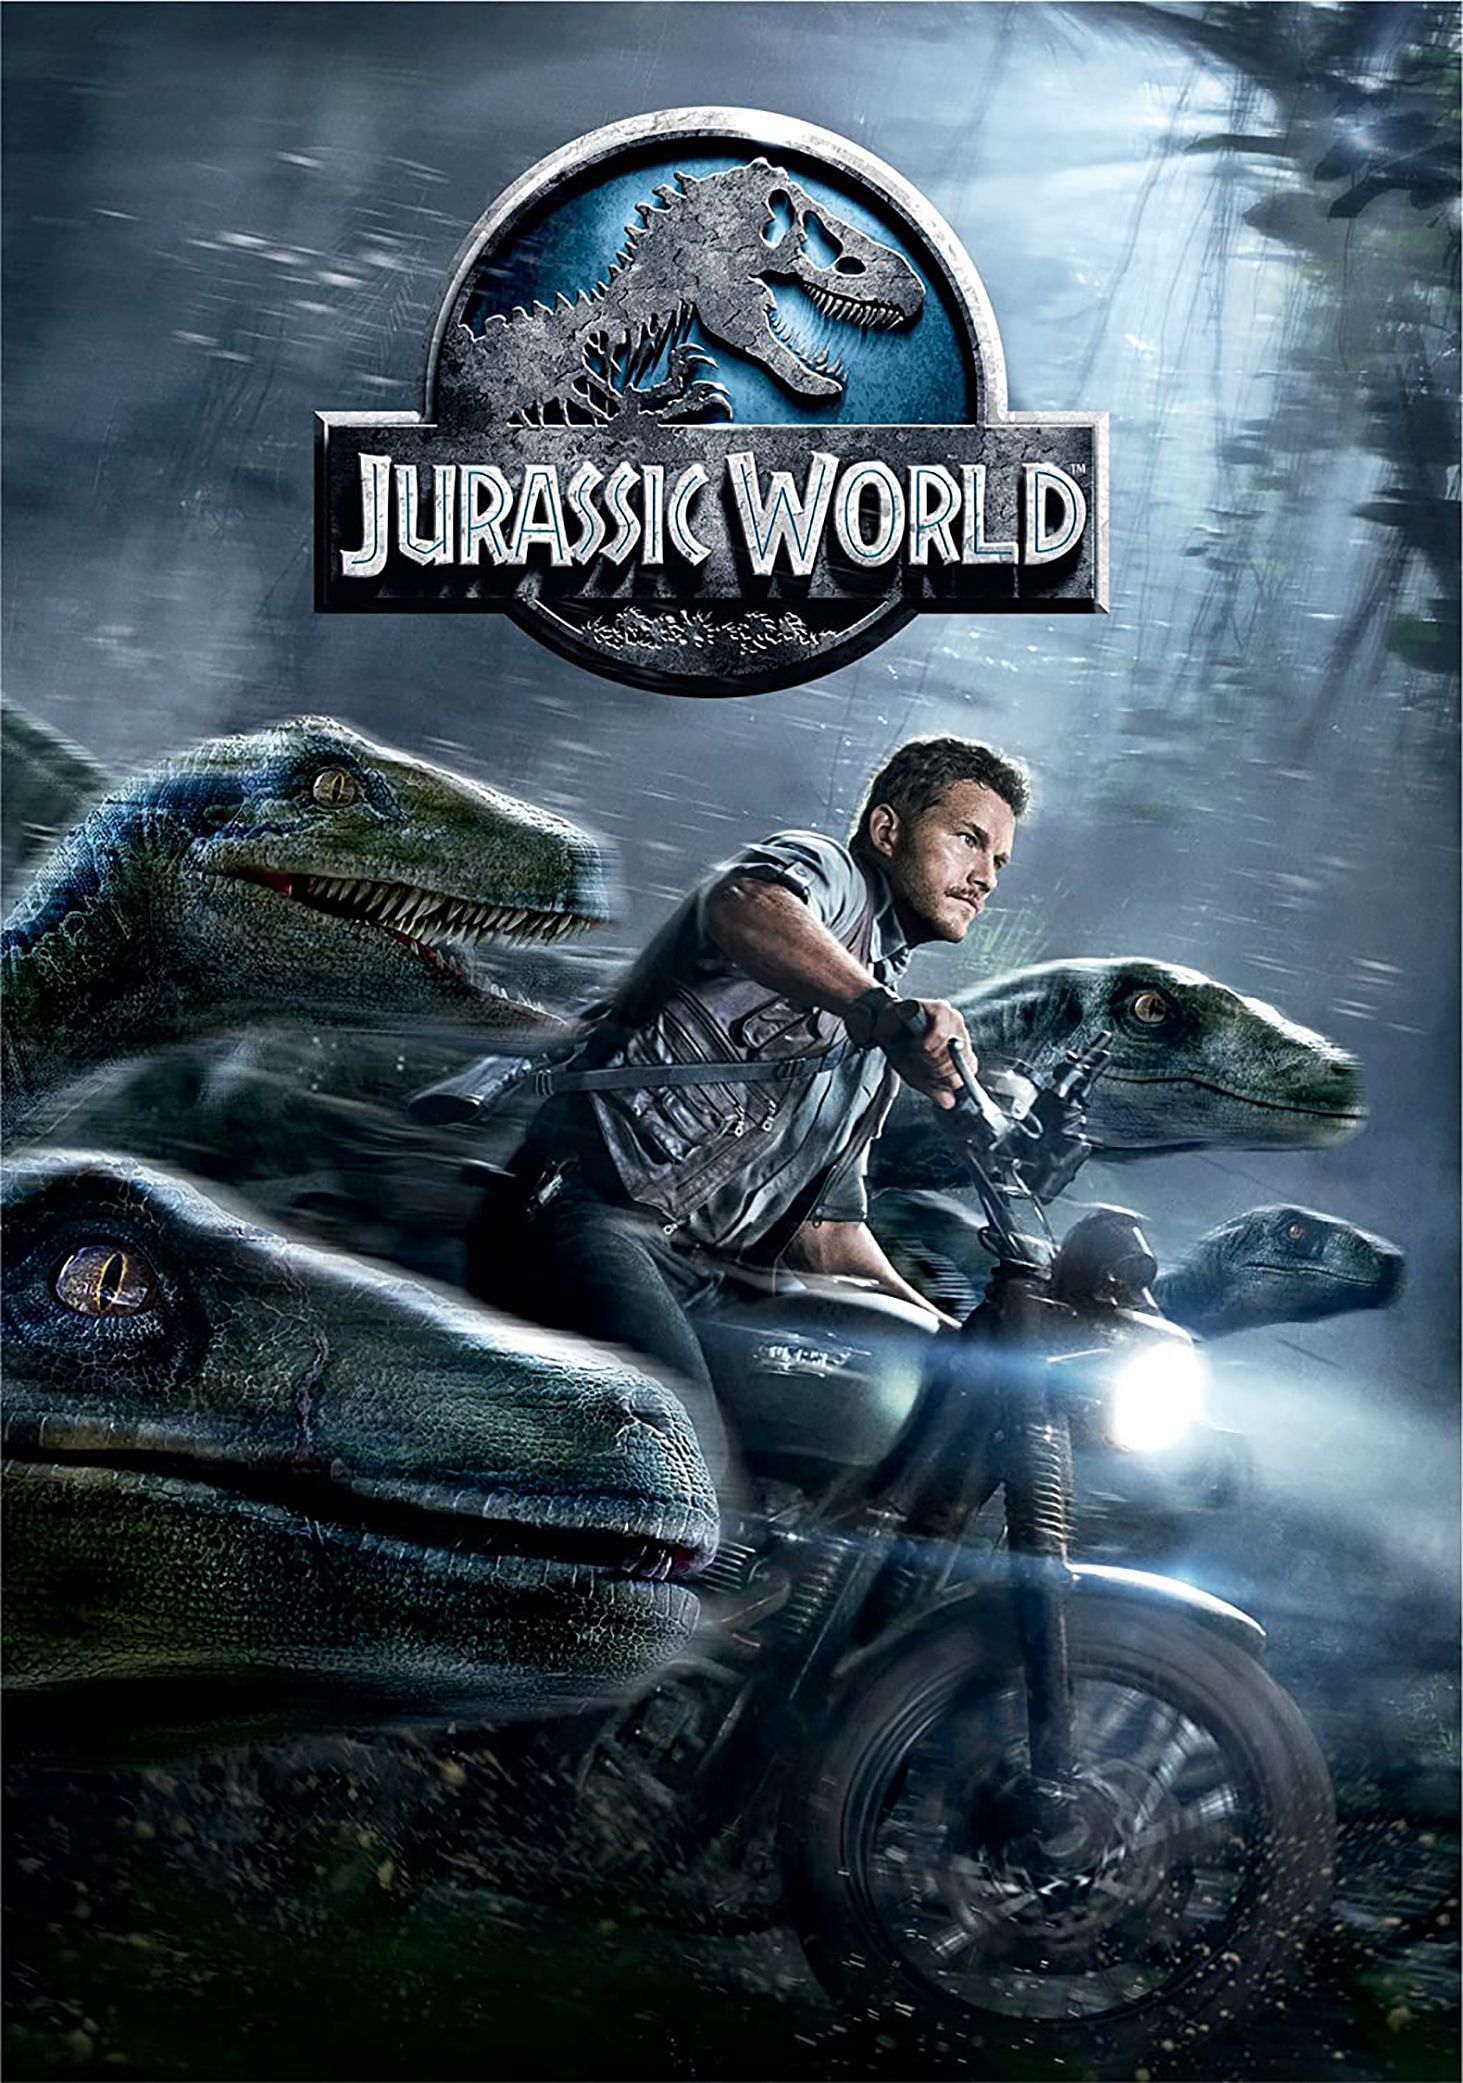 Jurassic World (Image via Universal)